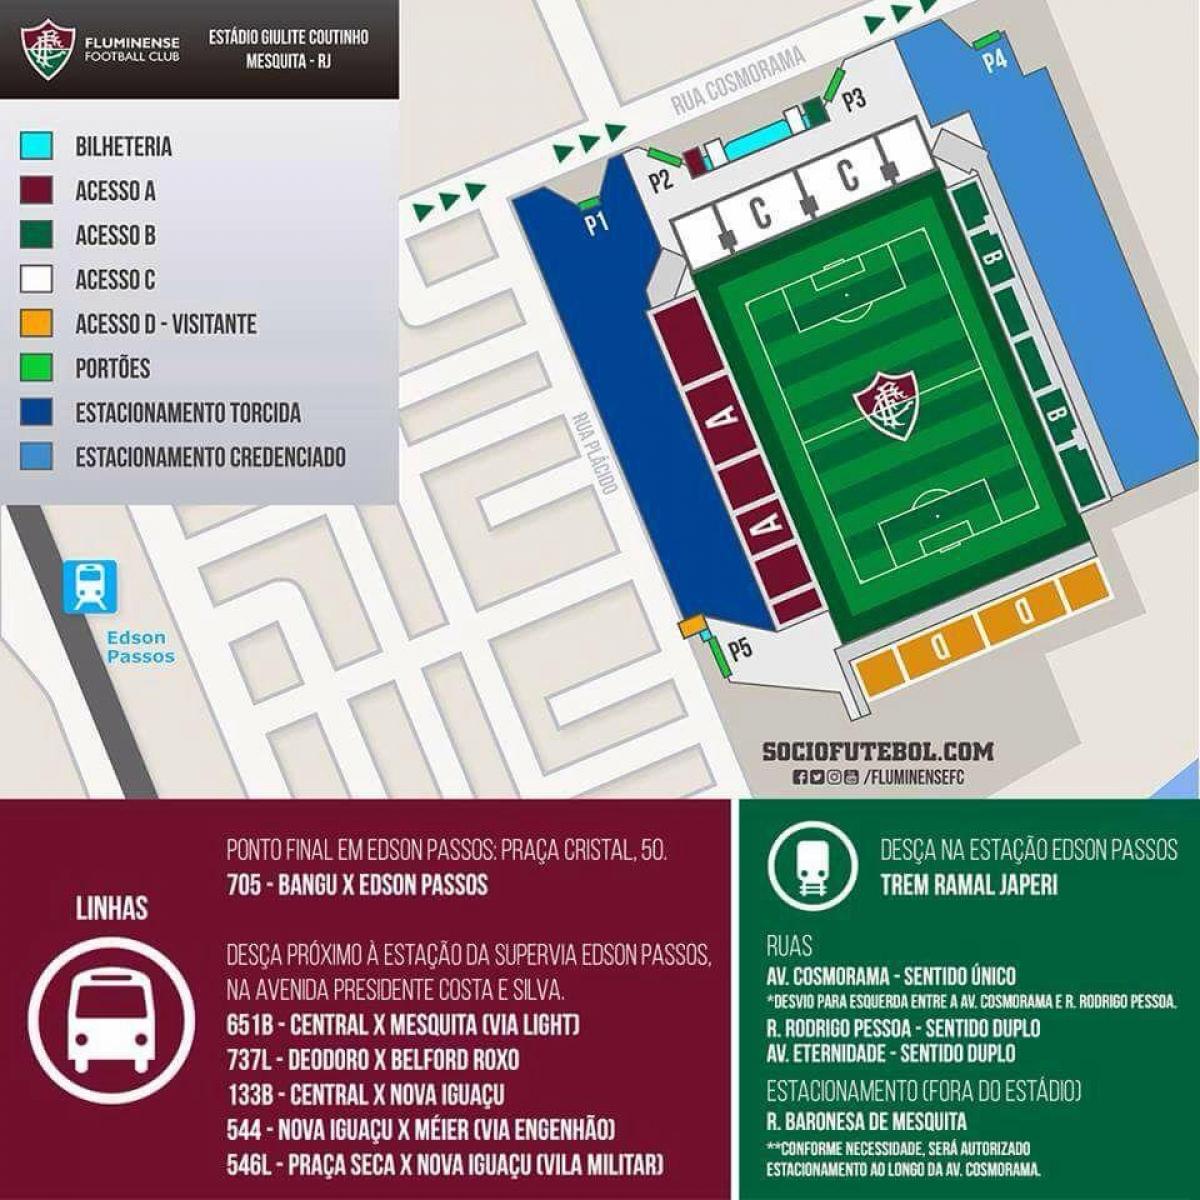 Harta e stadiumit Giulite Coutinho